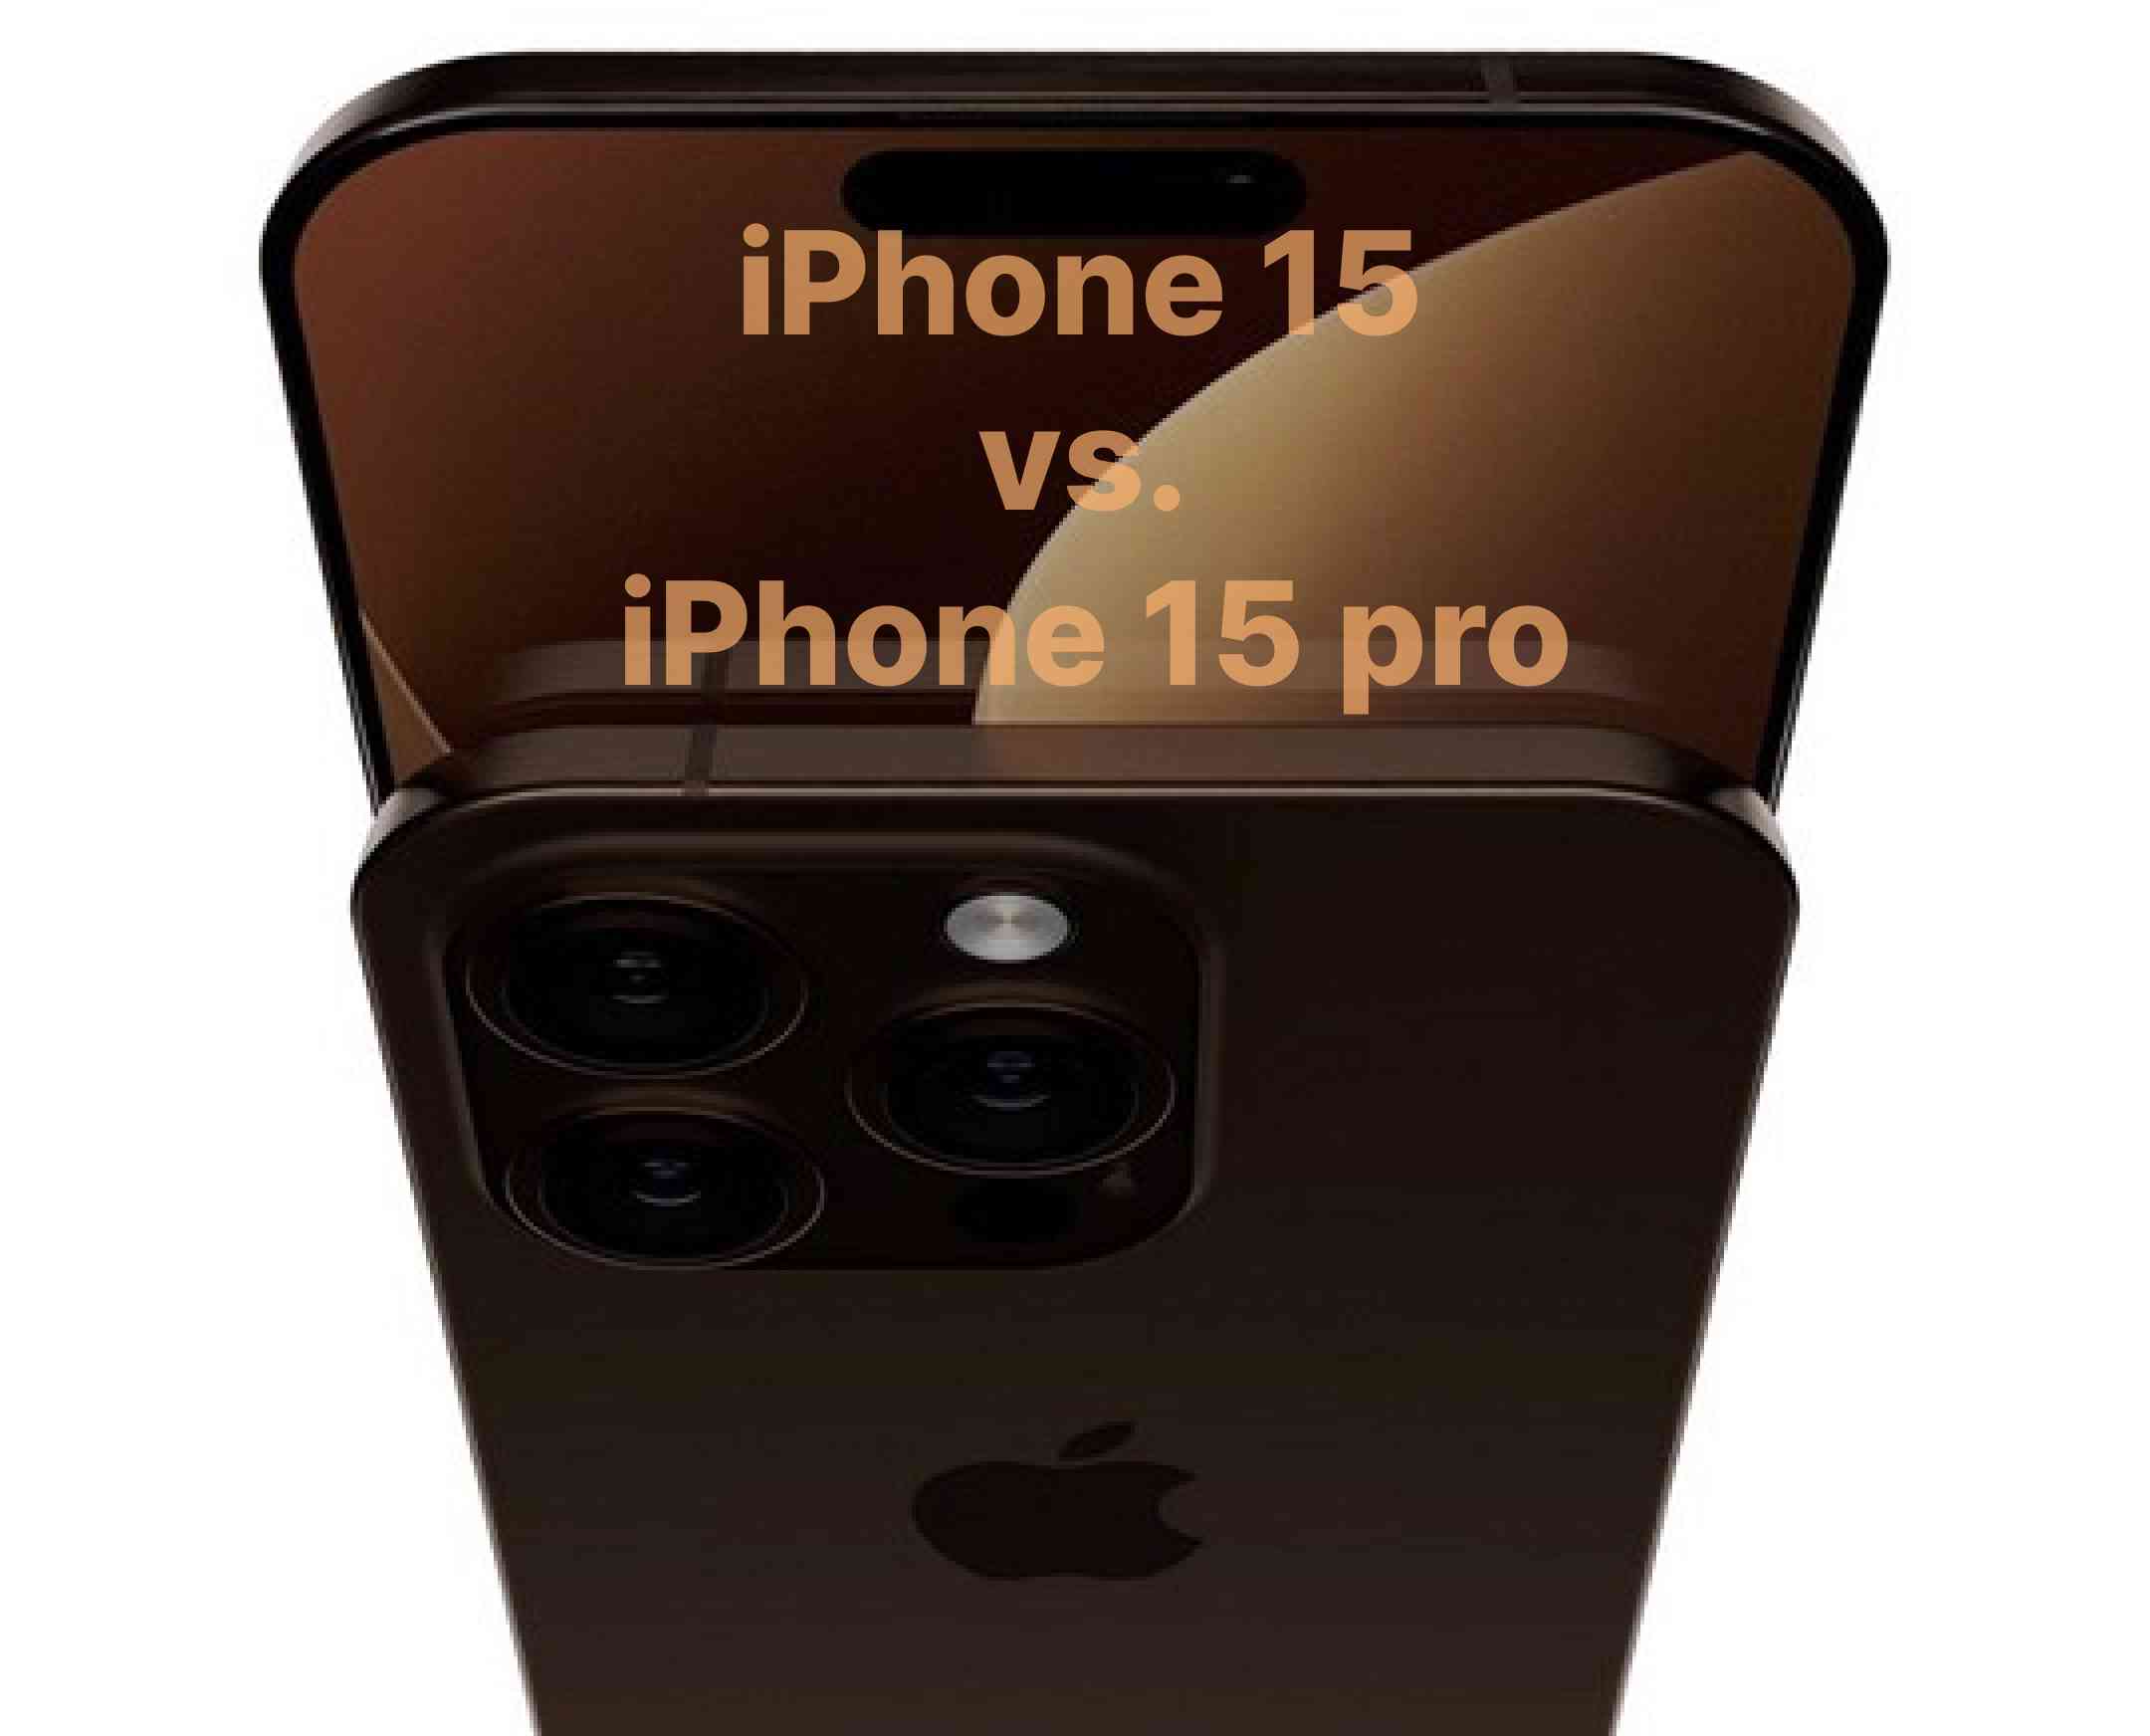 iPhone 15 x iPhone 15 Pro: O 15 Pro vale dinheiro extra?